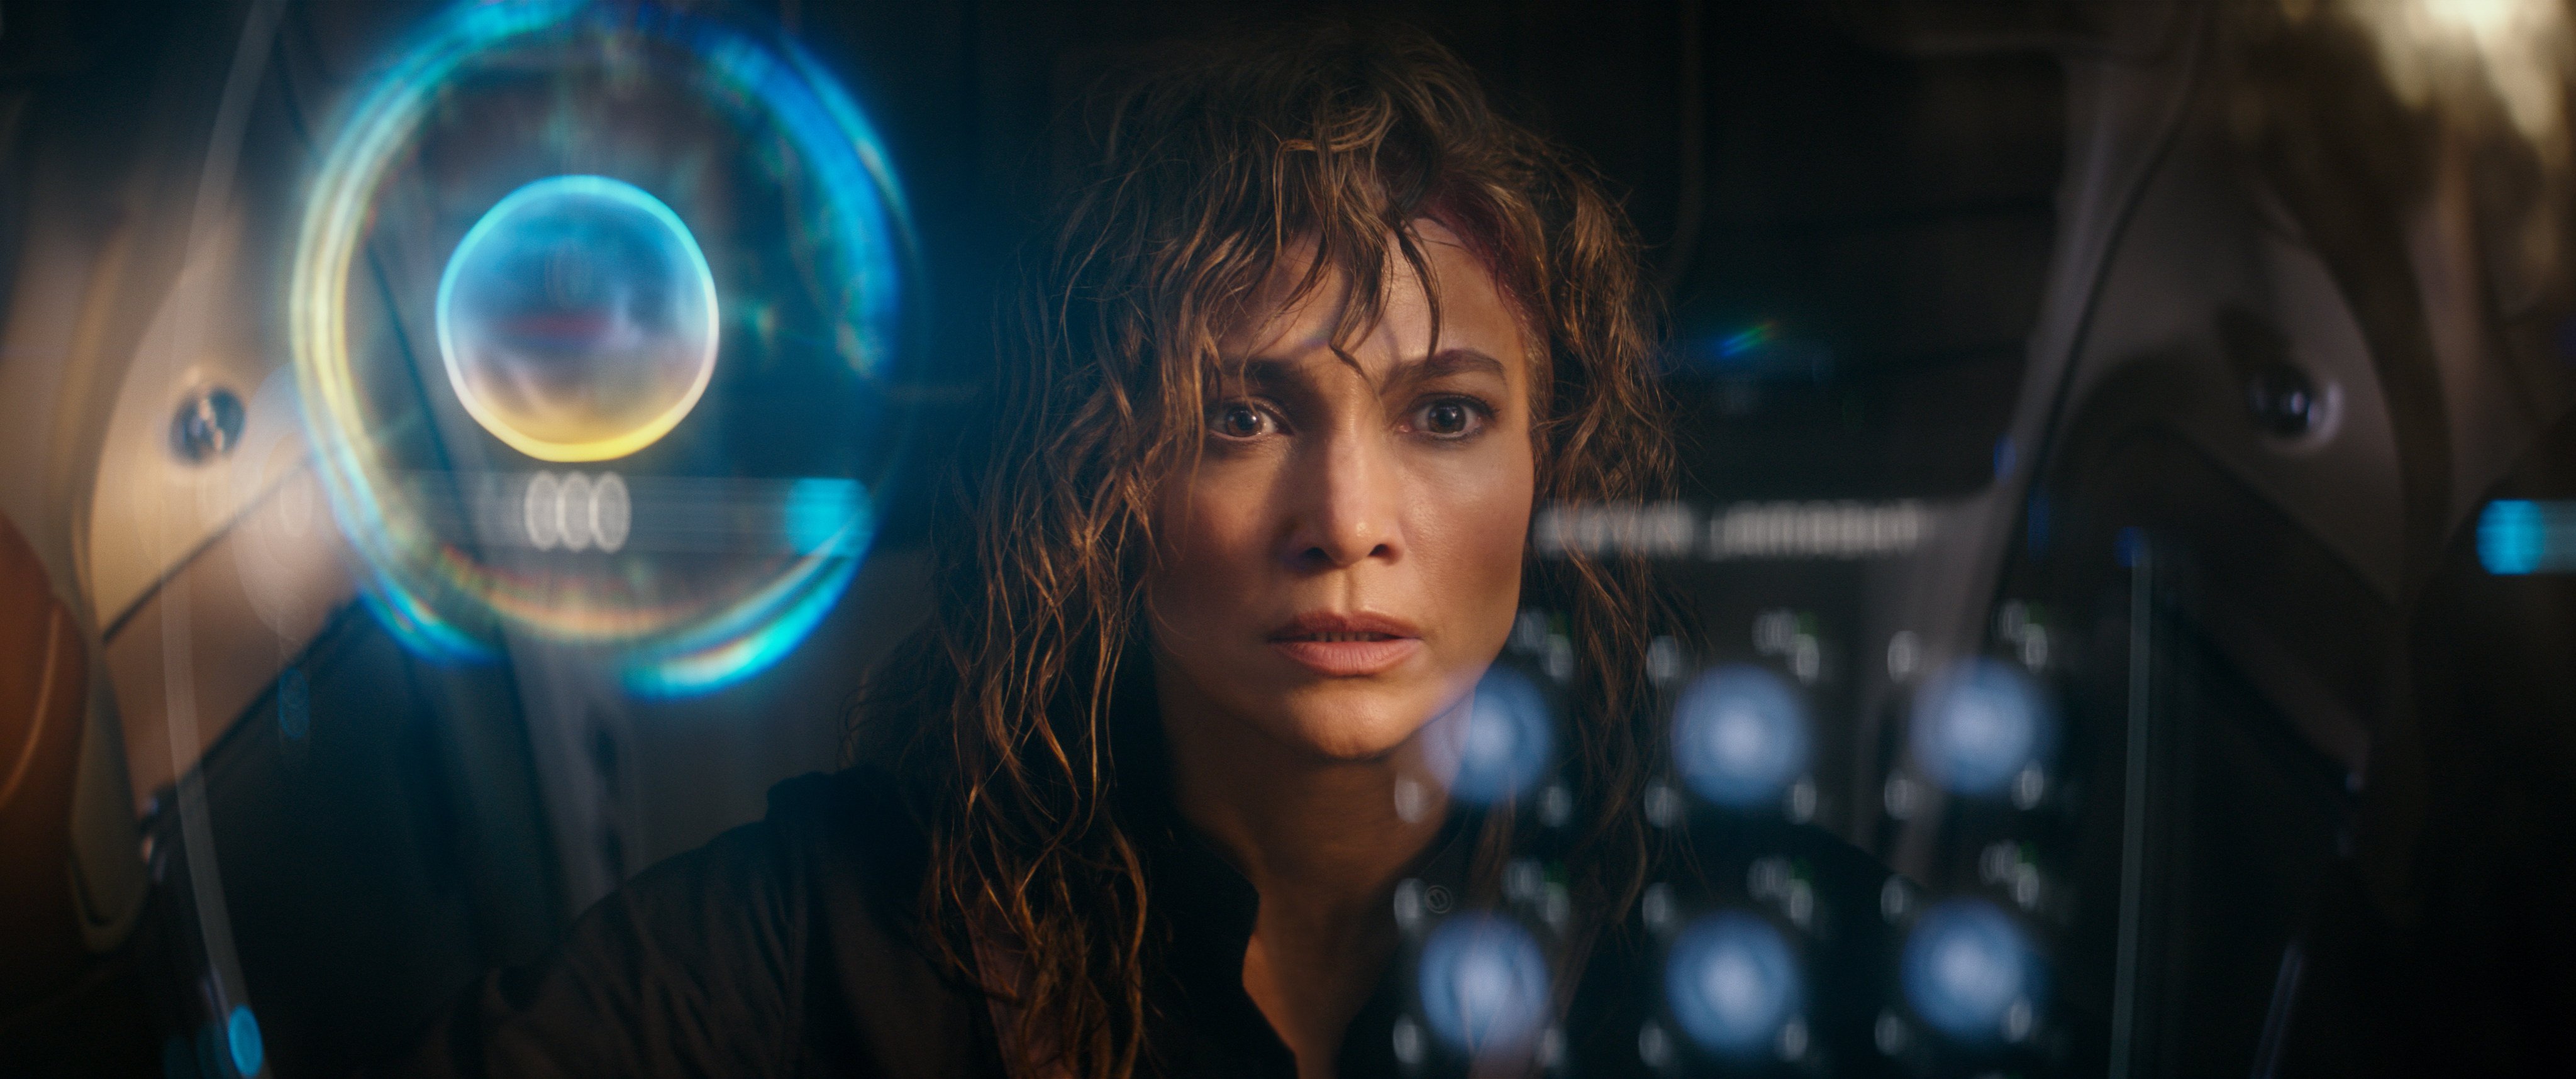 Jennifer Lopez as Atlas Shepherd in a still from Atlas, directed by Brad Peyton and co-starring Simu Liu. Photo: Netflix